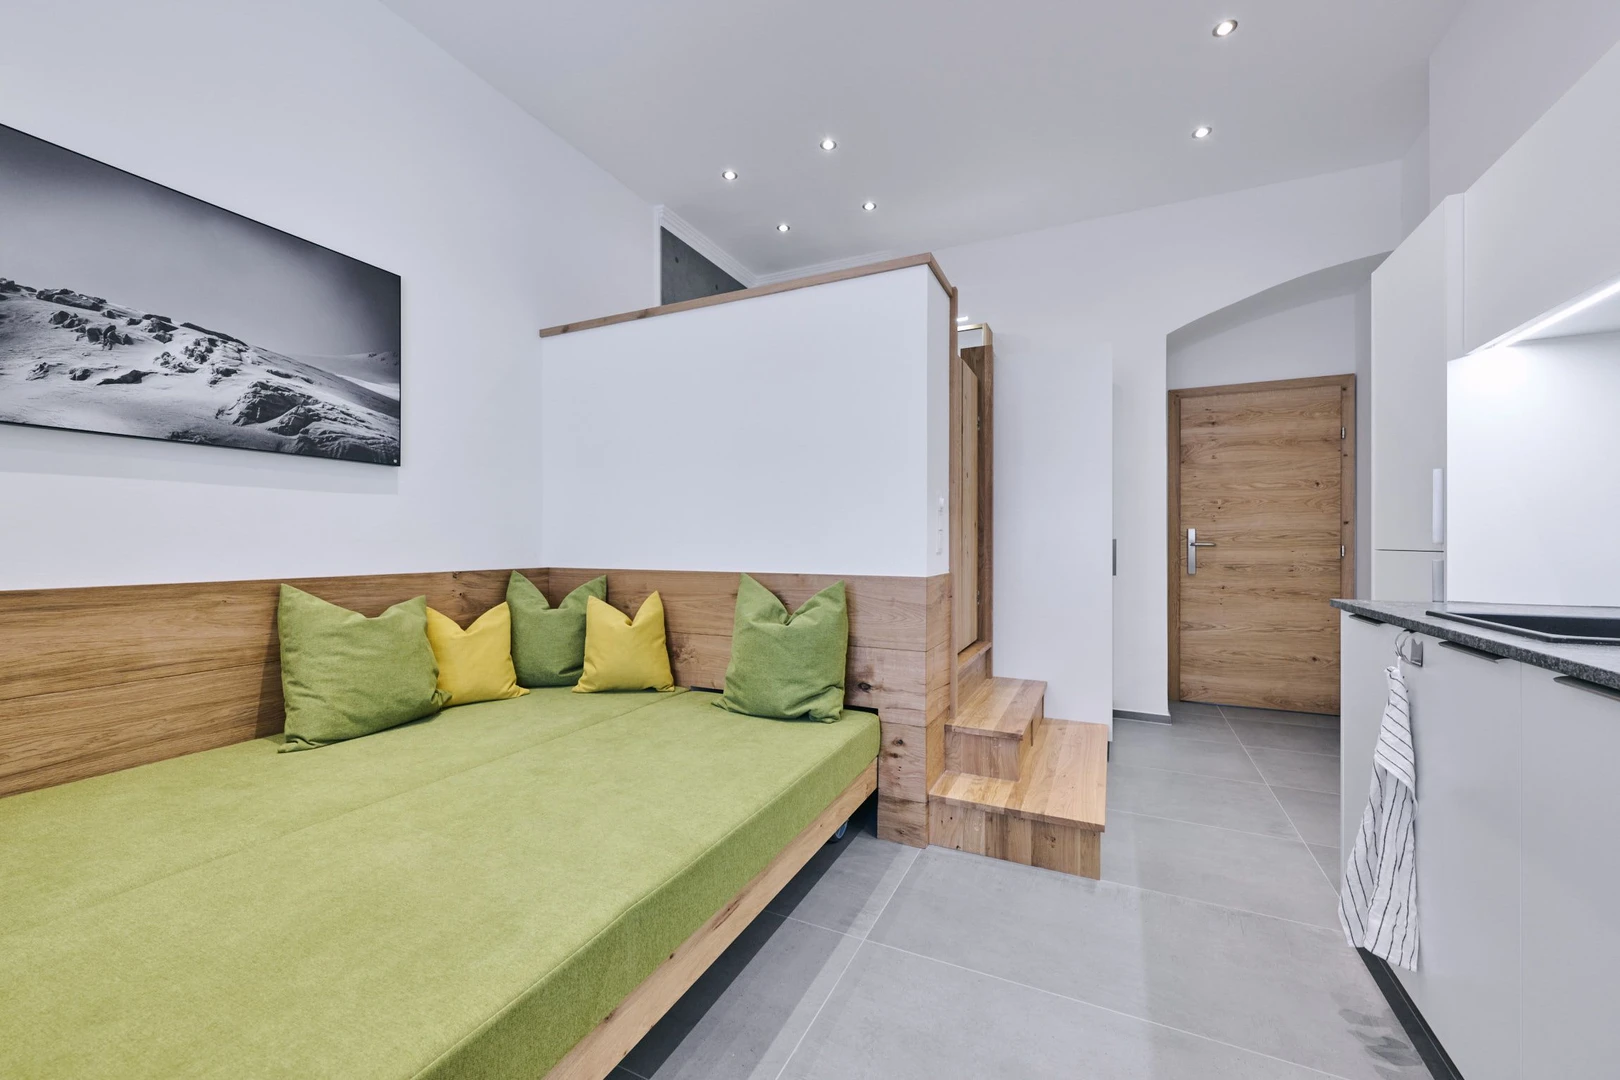 Cheap private room in Innsbruck